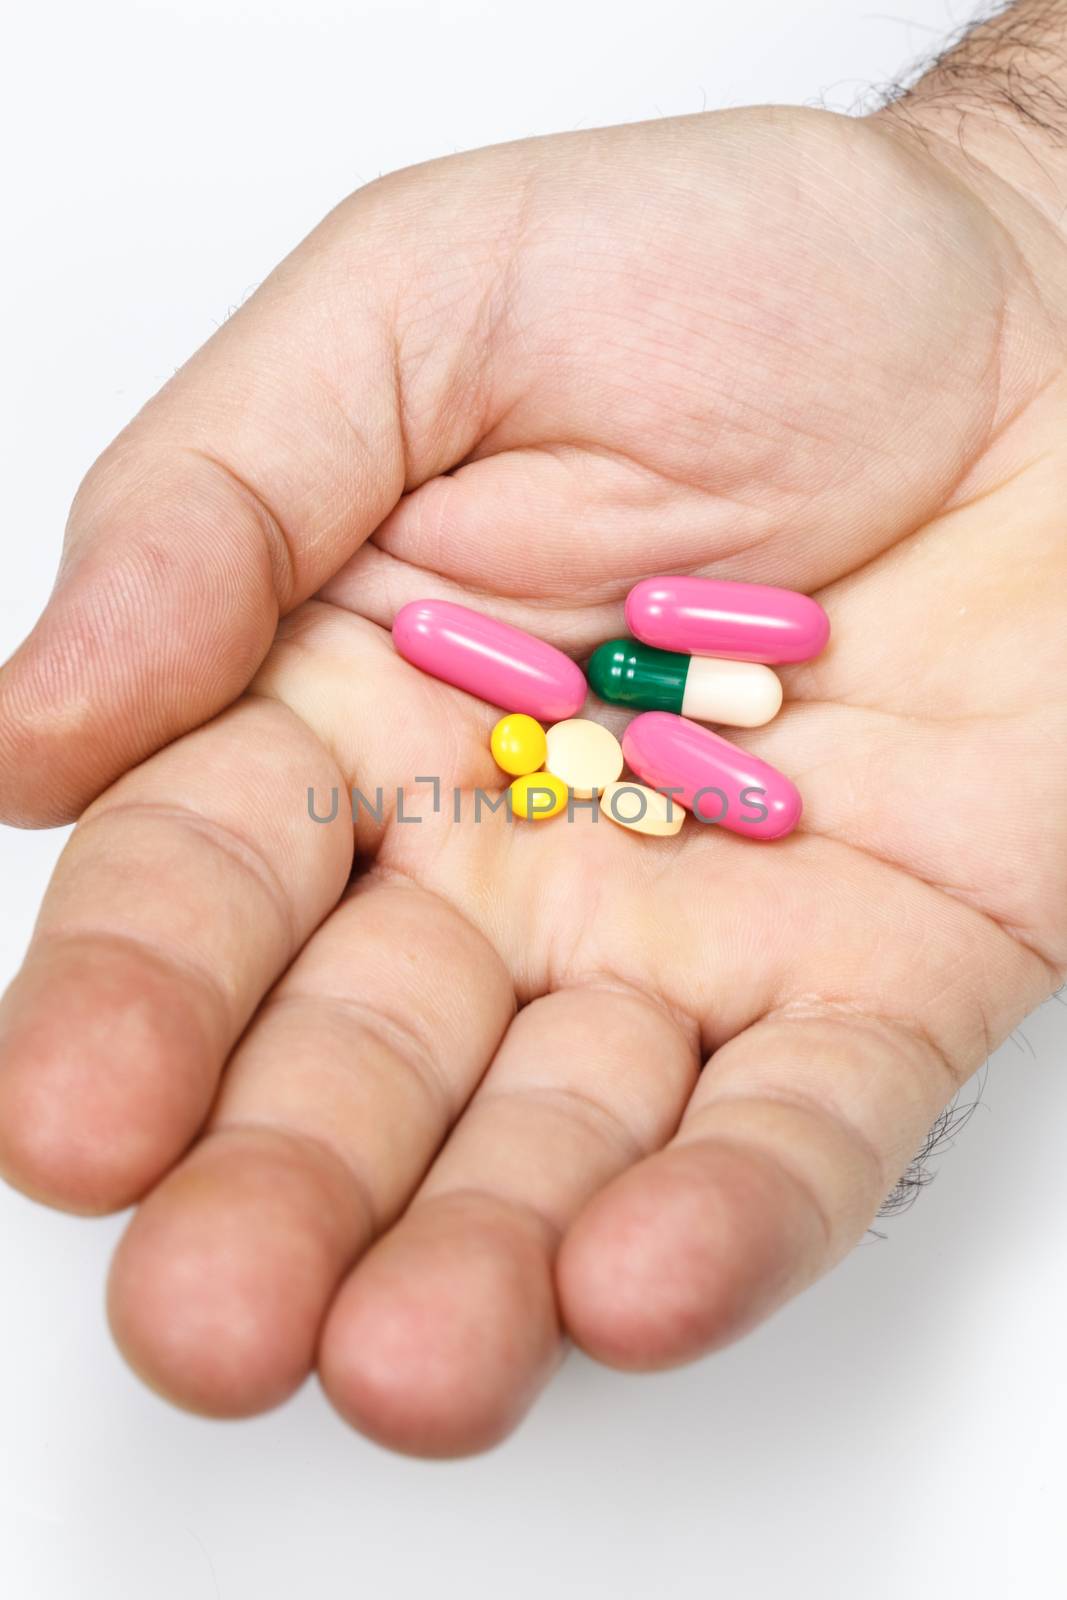 Handful of Medication. by Slast20